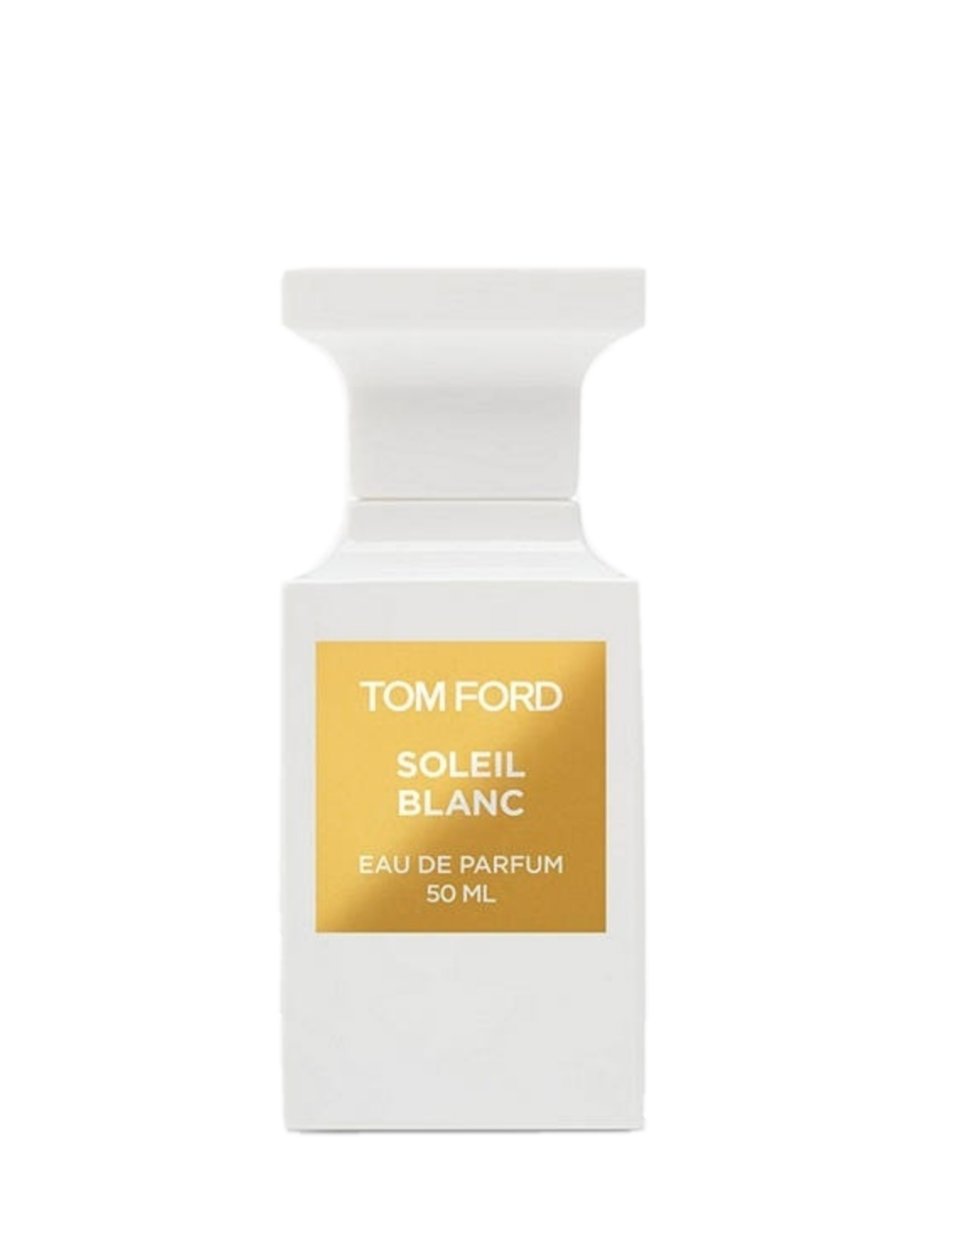 Tom Ford Soleil Blanc Private Blend Fragrance Samples